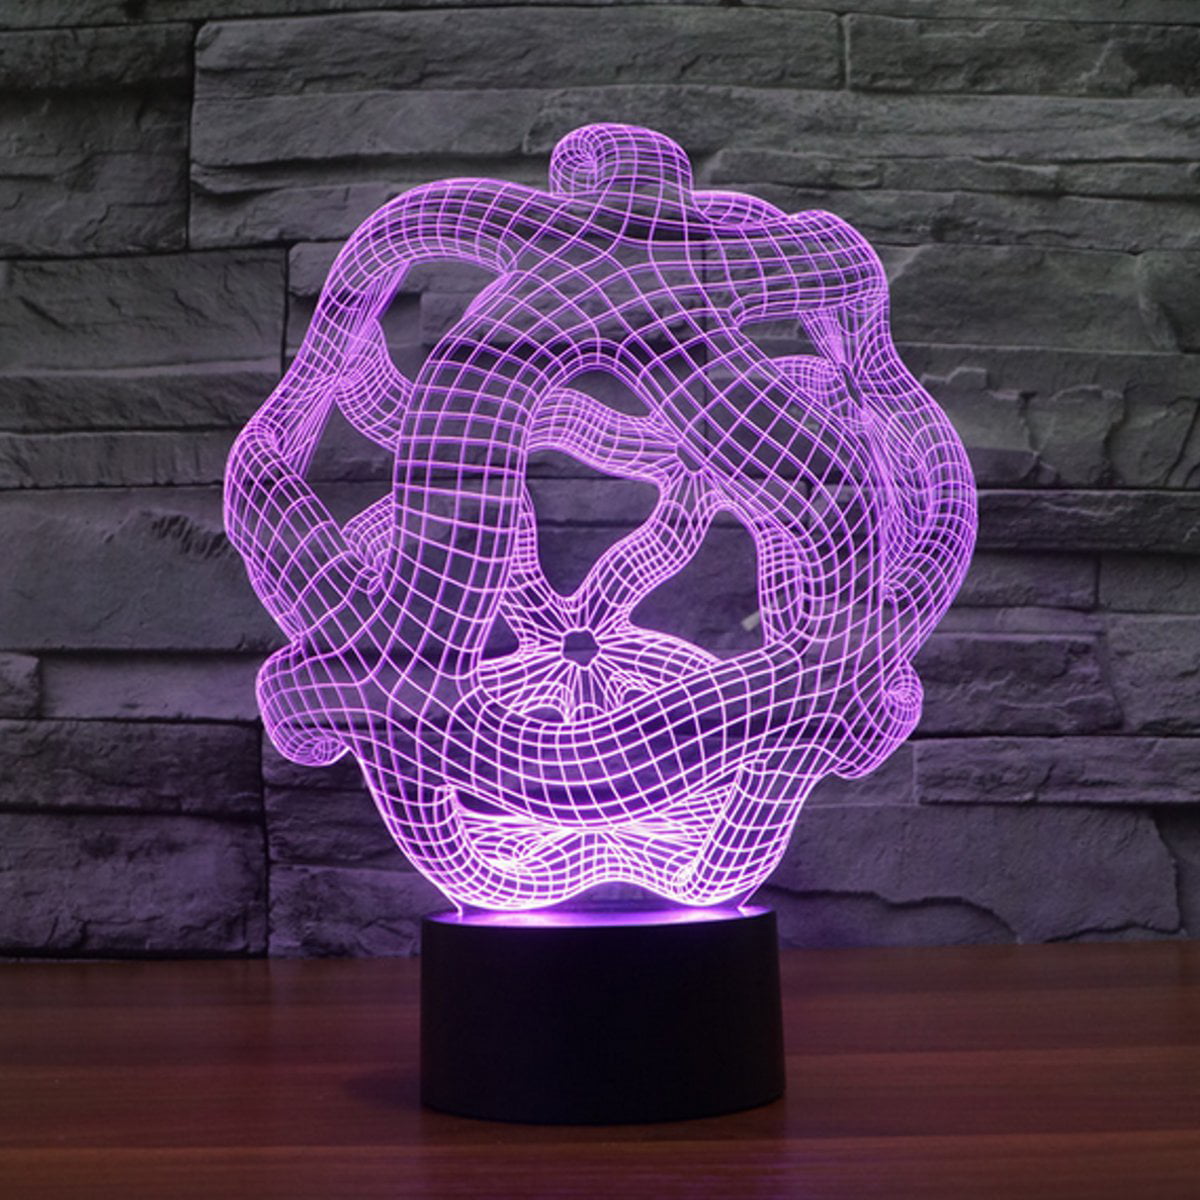 3D illusion Visual Night Light 7 Colors Change LED Table Desk Lamp Bedroom Decor